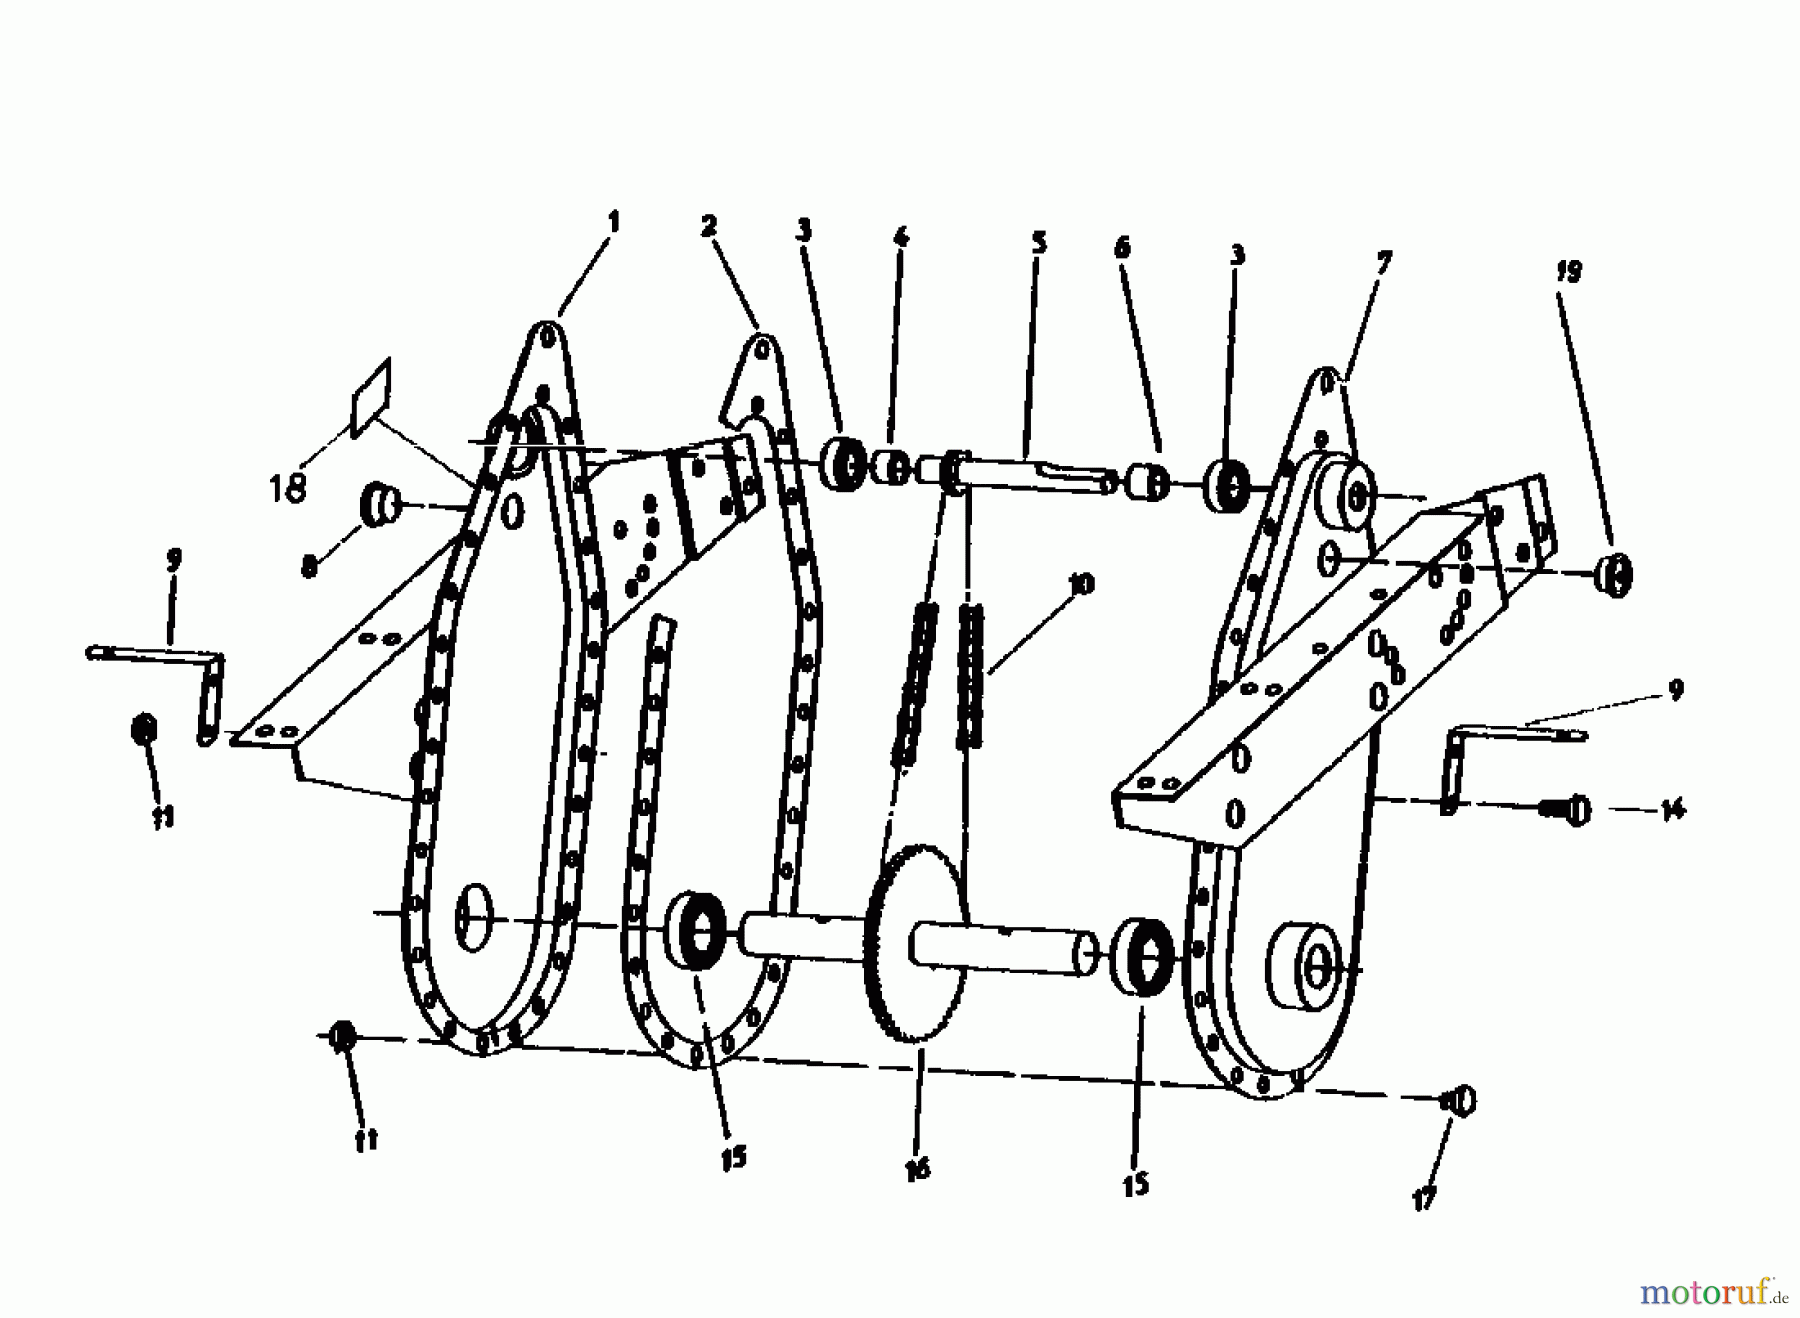  Gutbrod Motobineuse MB 60-52 07512.07  (1985) Transmission de chaine